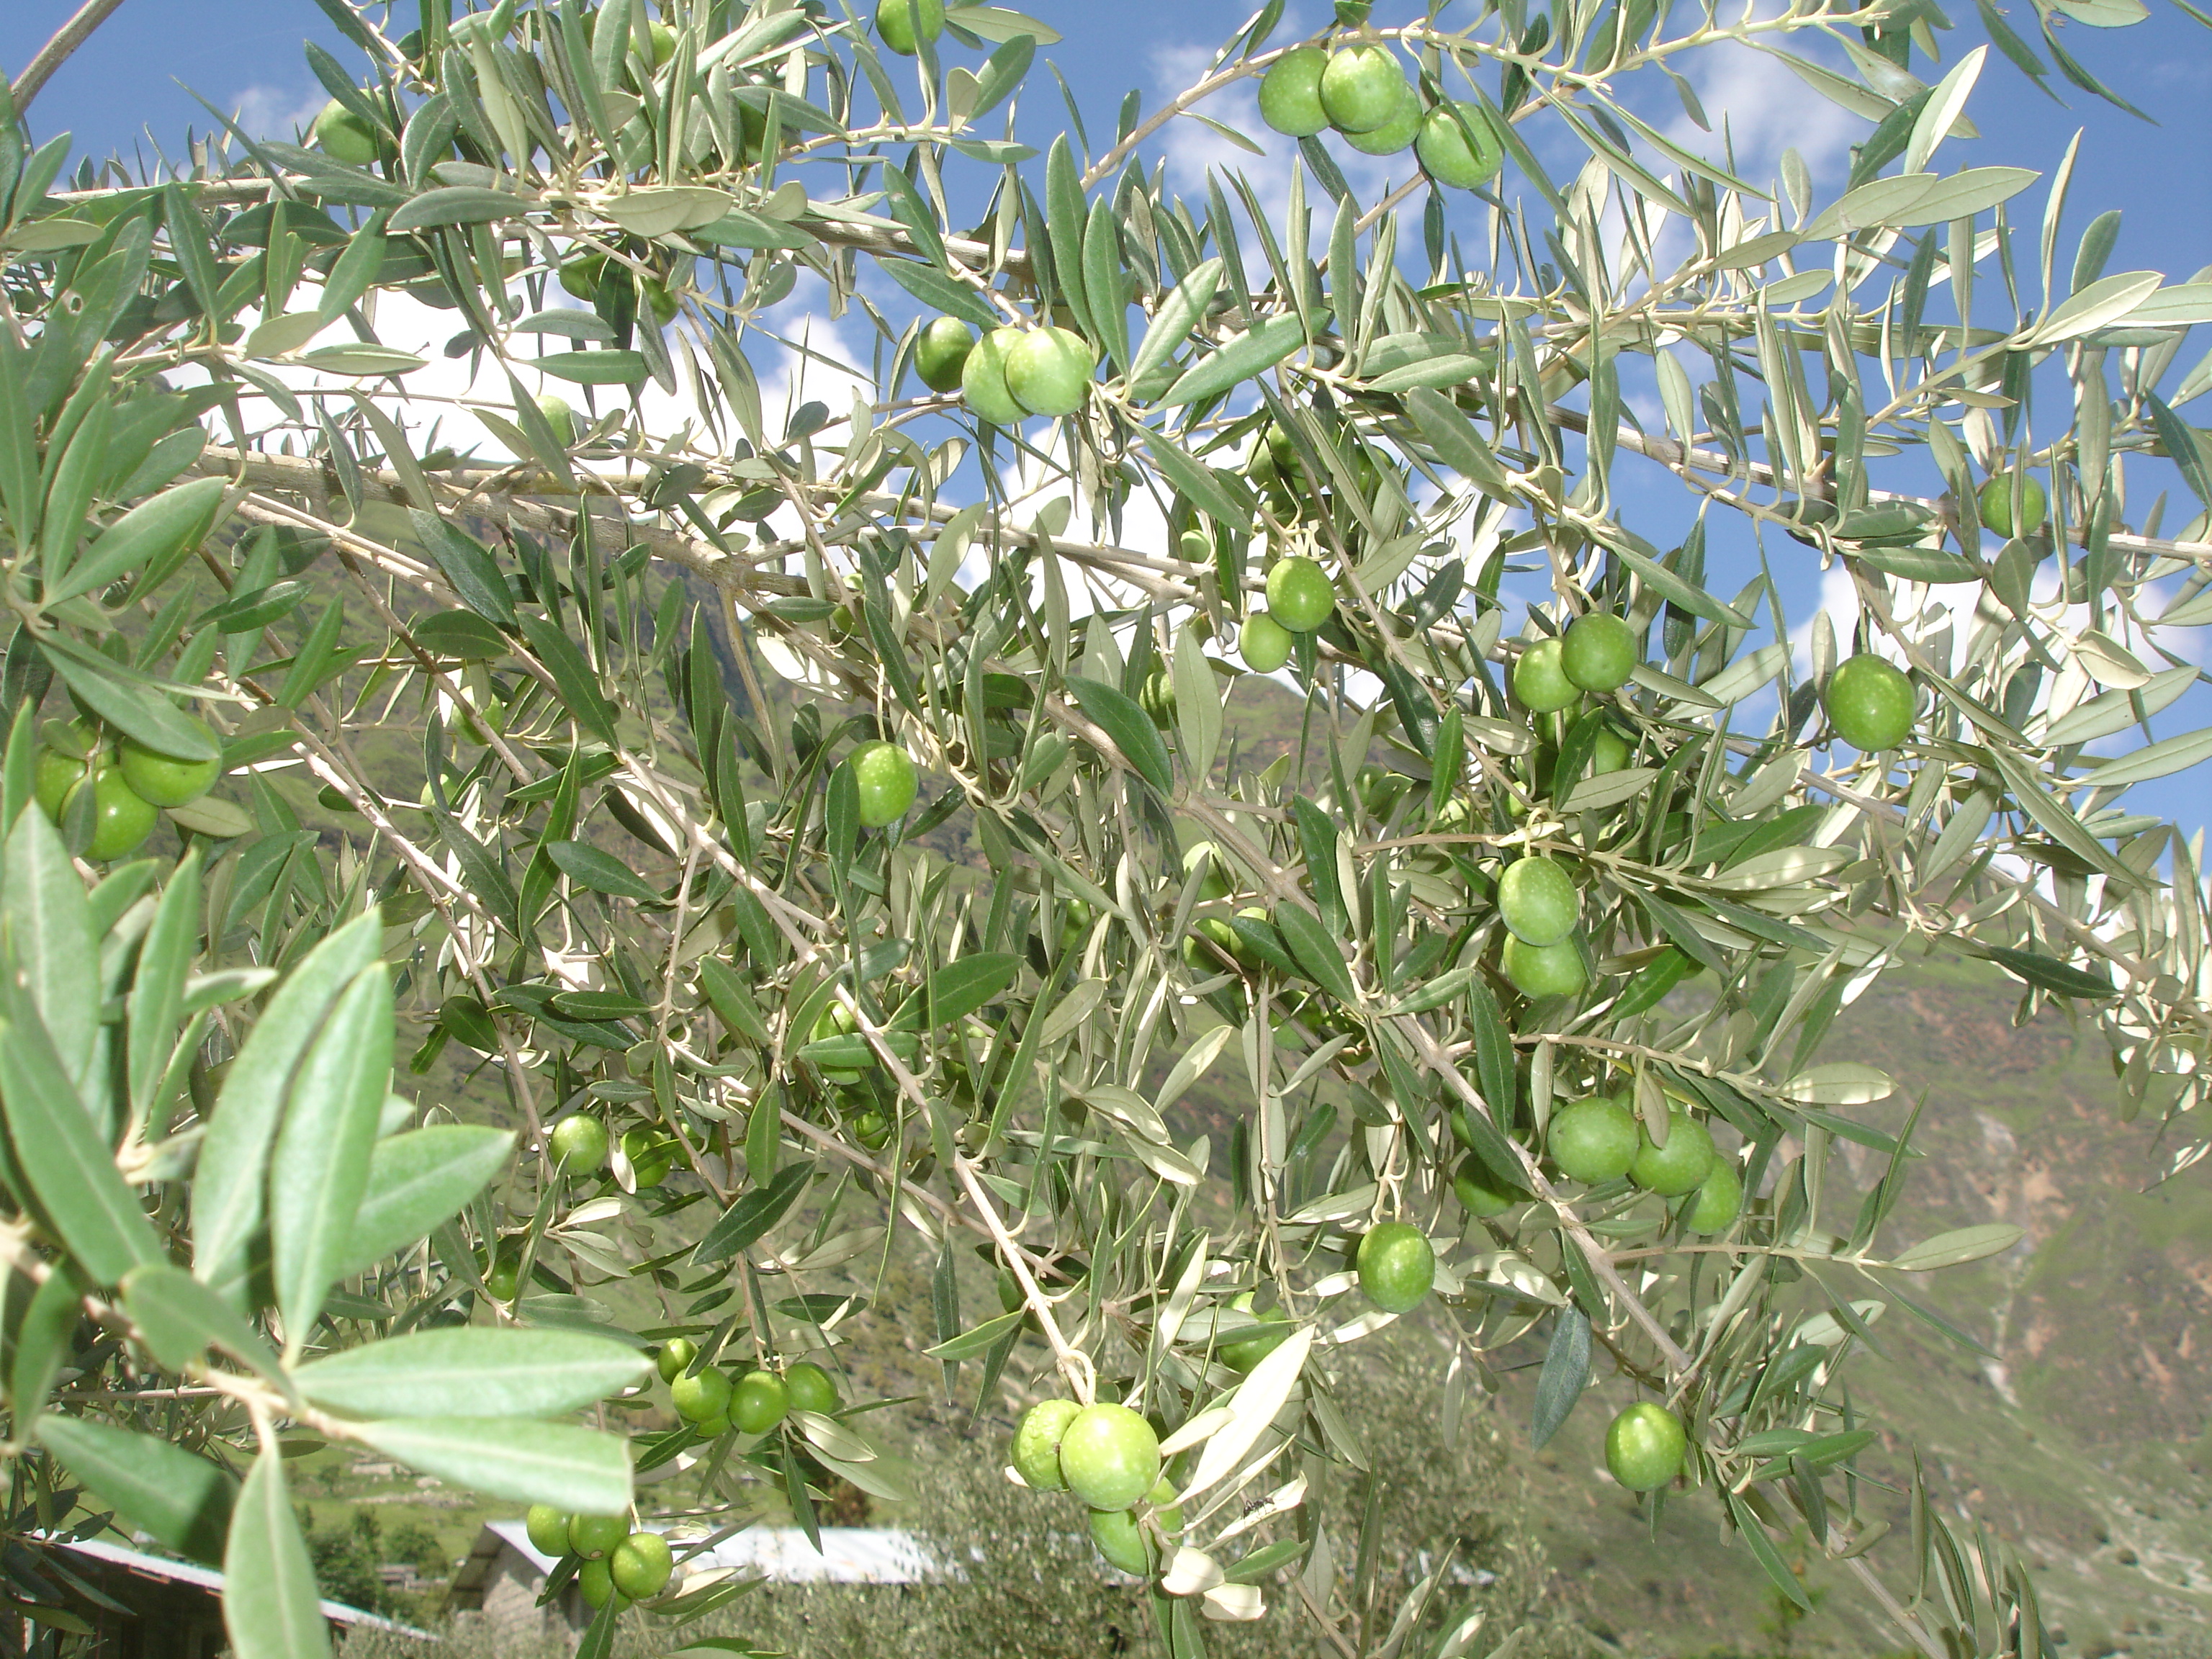 Olive plants planted in Tripurasundari Temple